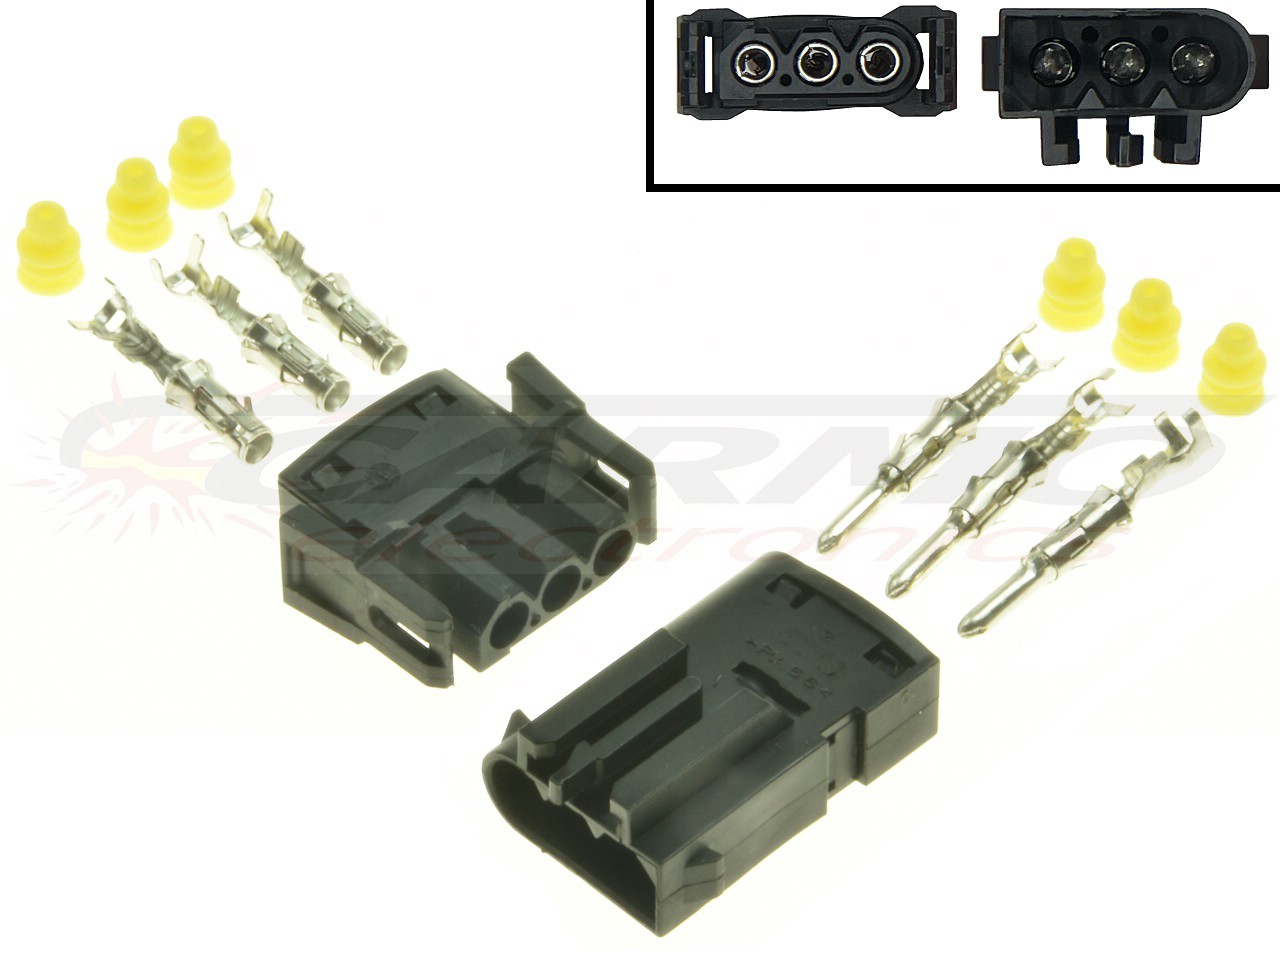 BMW C400 F650 F700 F800 voltage regulator rectifier connector set (AMP 1-828817-1, BMW 1378114, PA66) - Clique na Imagem para Fechar